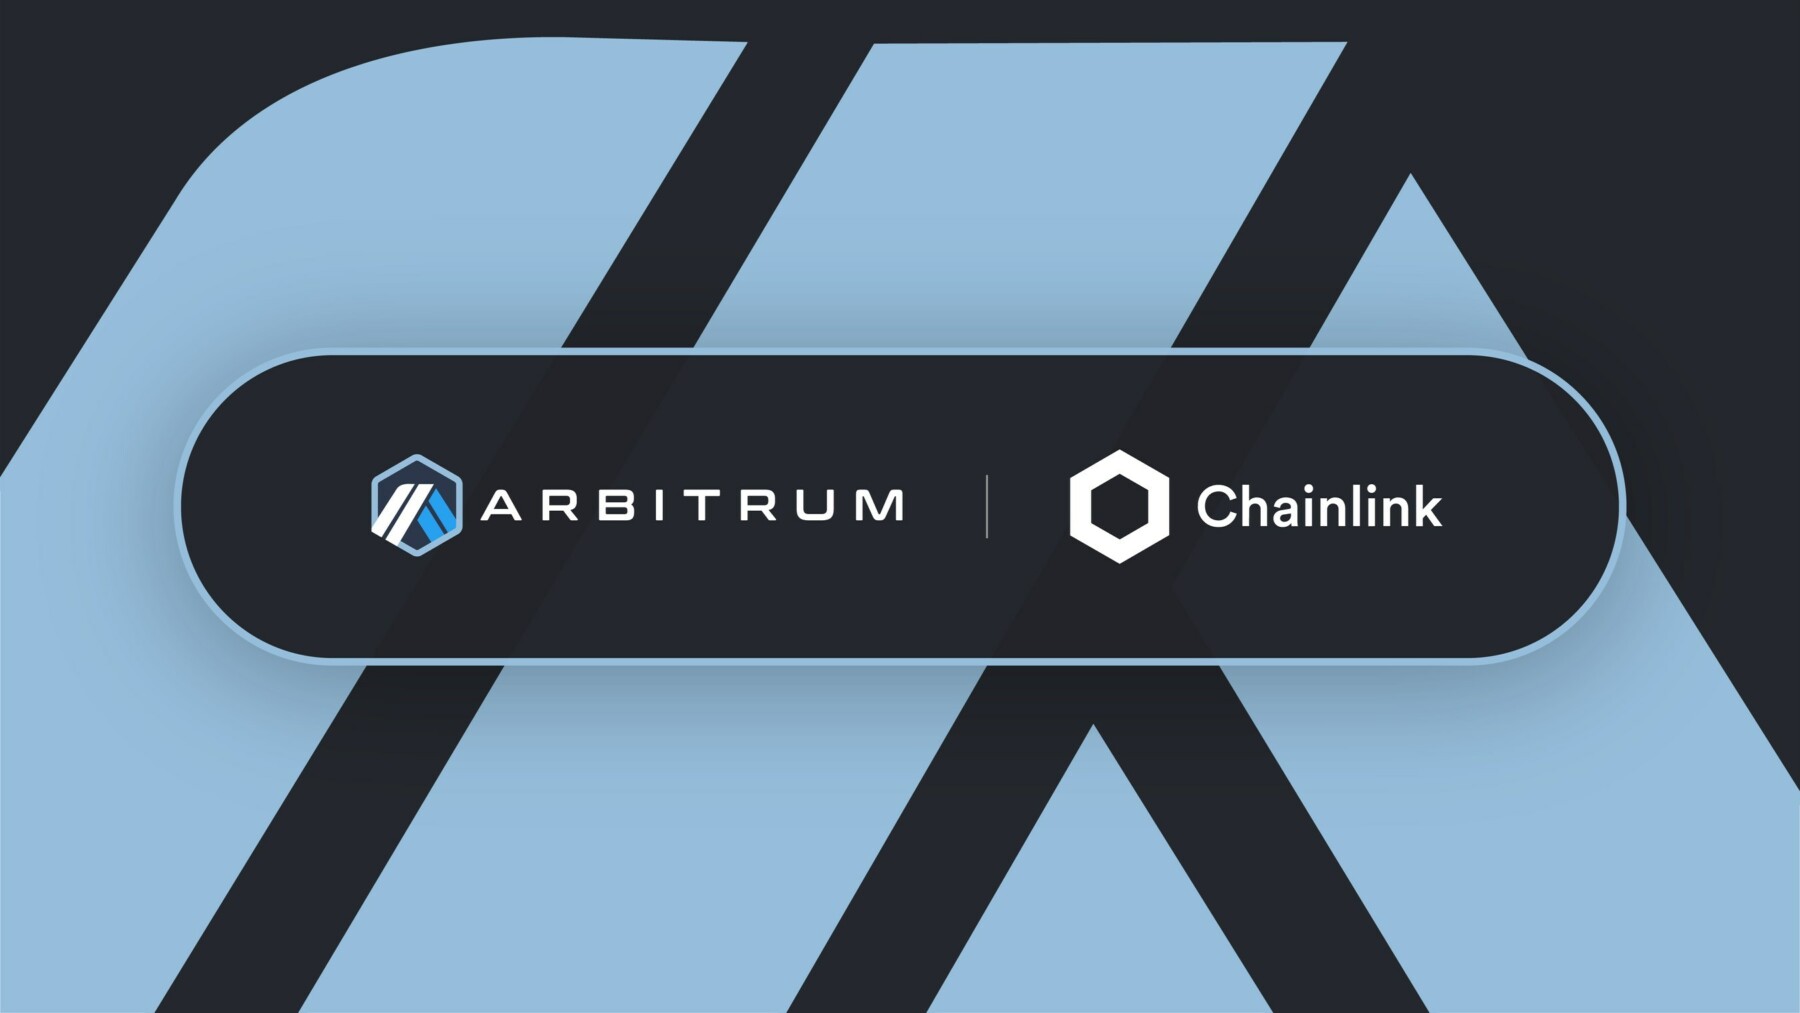 Arbitrum x Chainlink